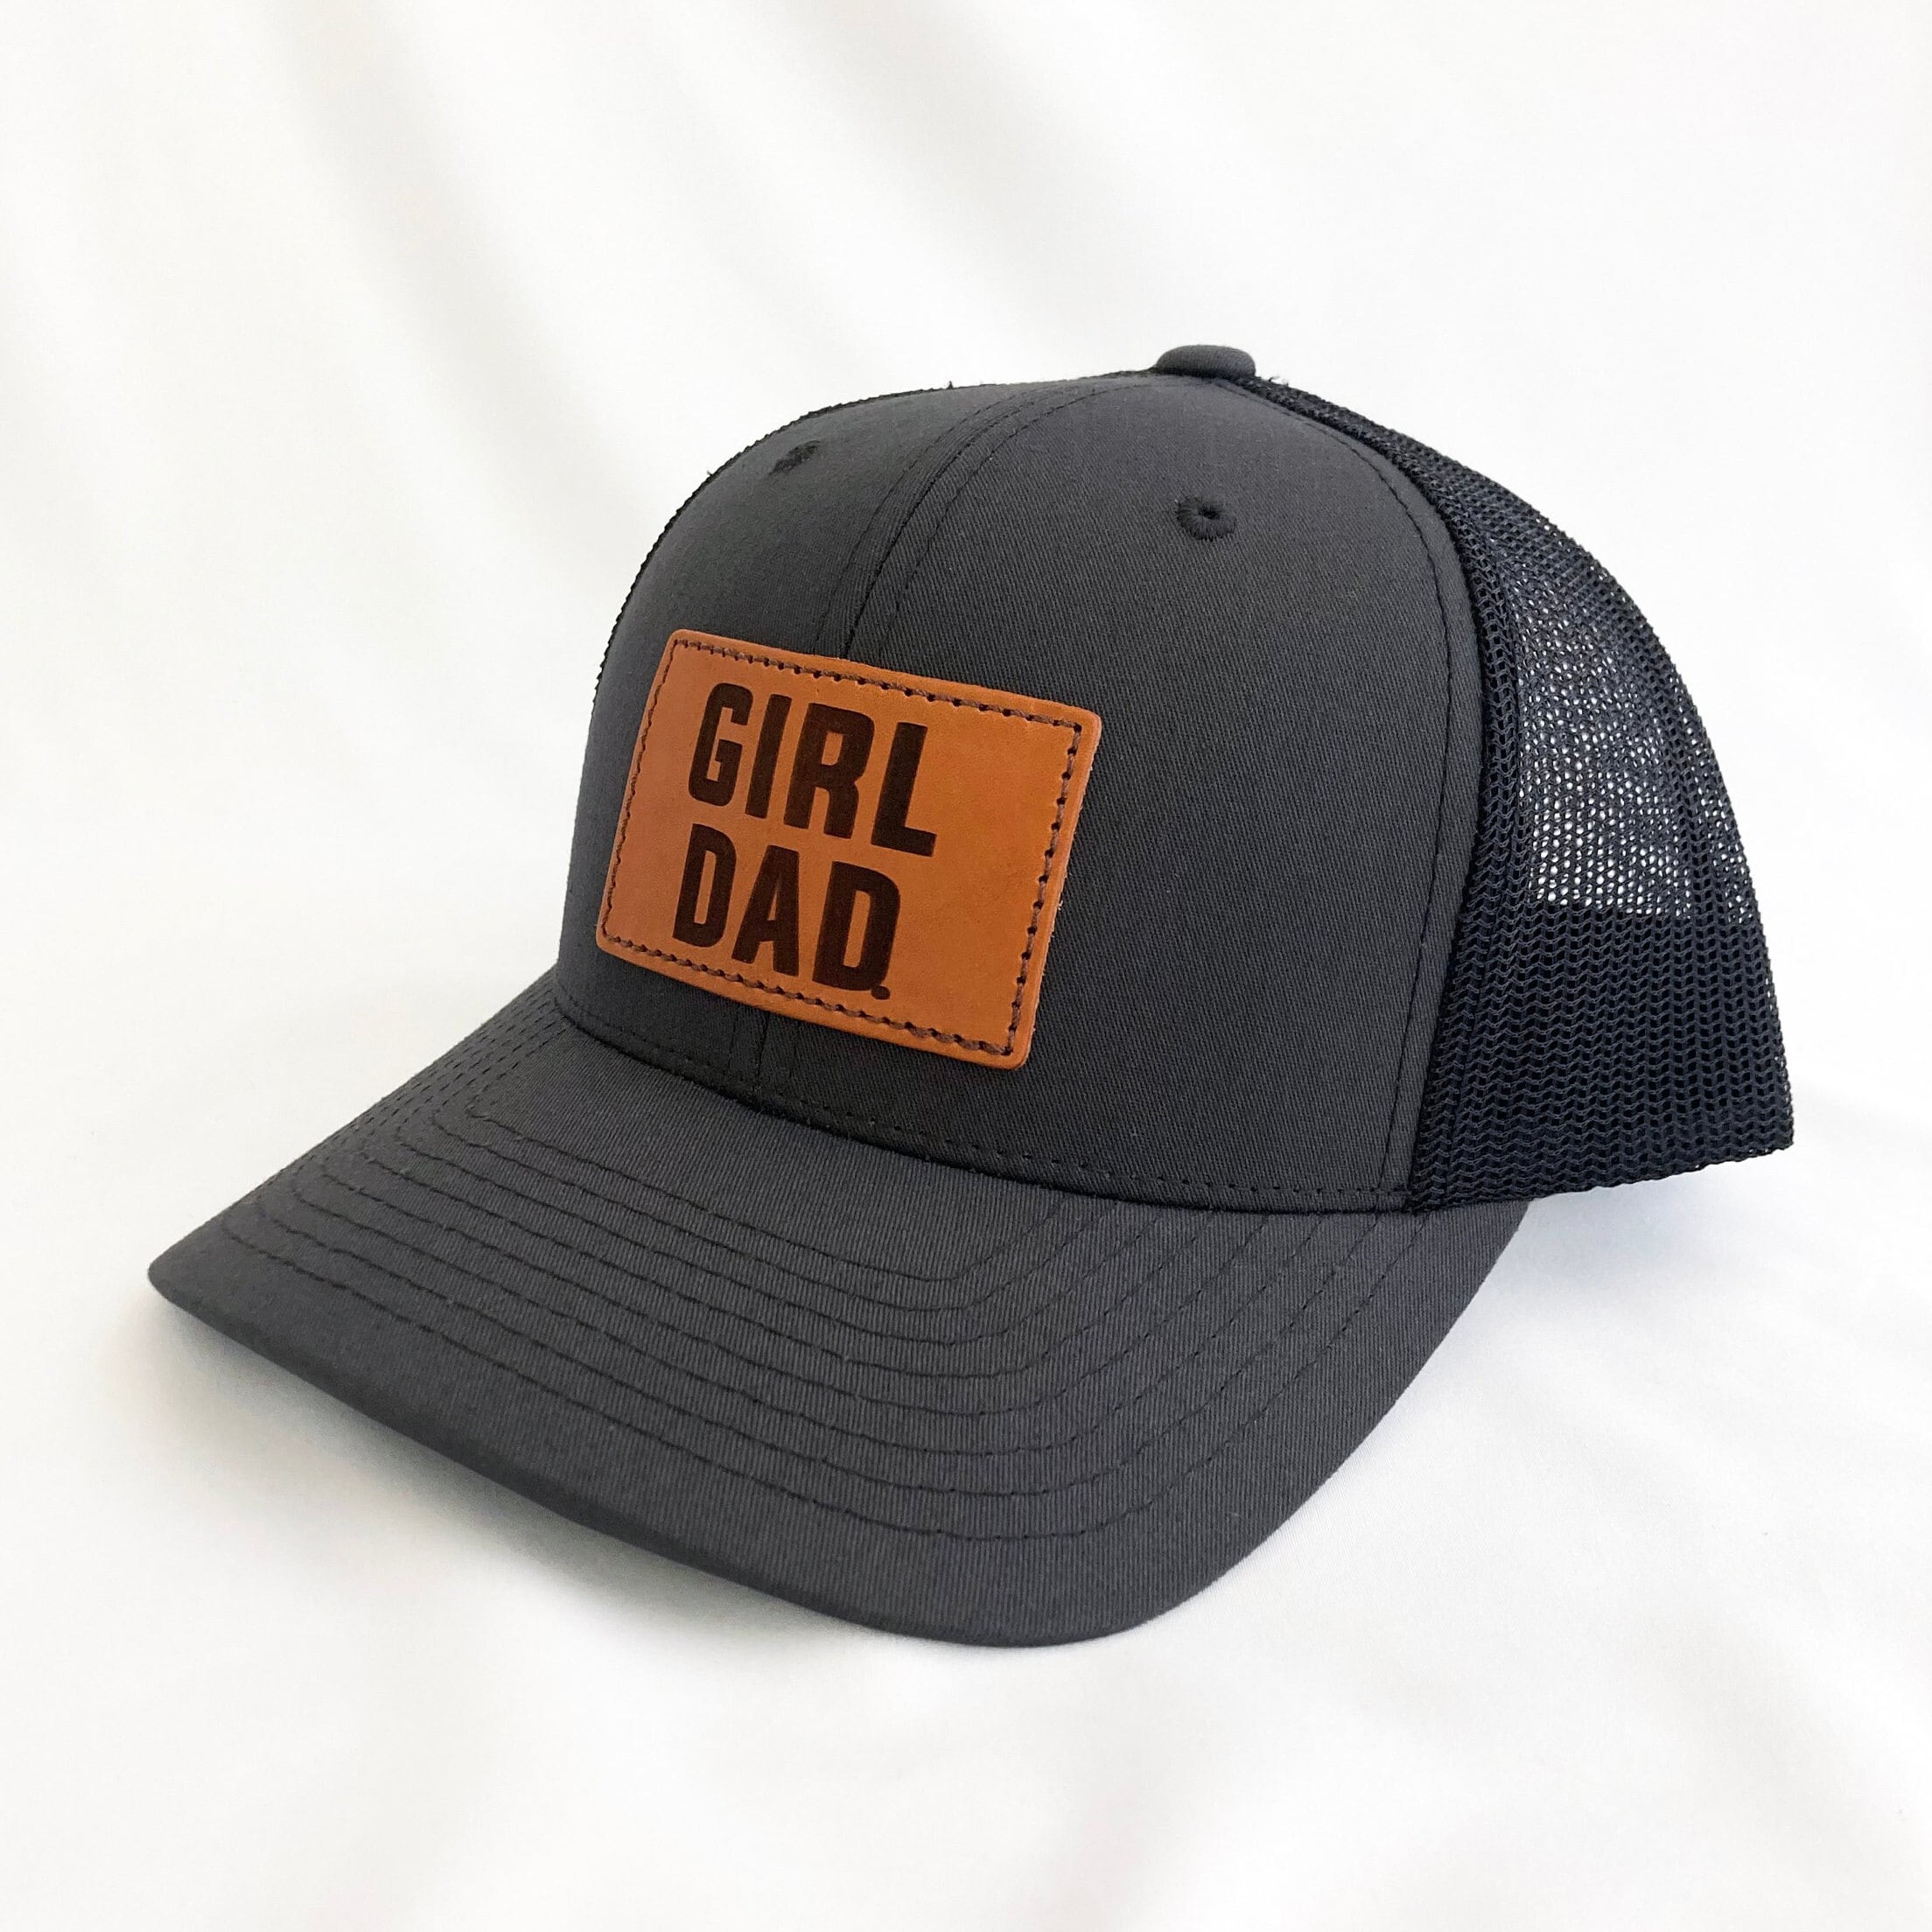 Girldad® Leather Patch Trucker Hat Charcoal/Black